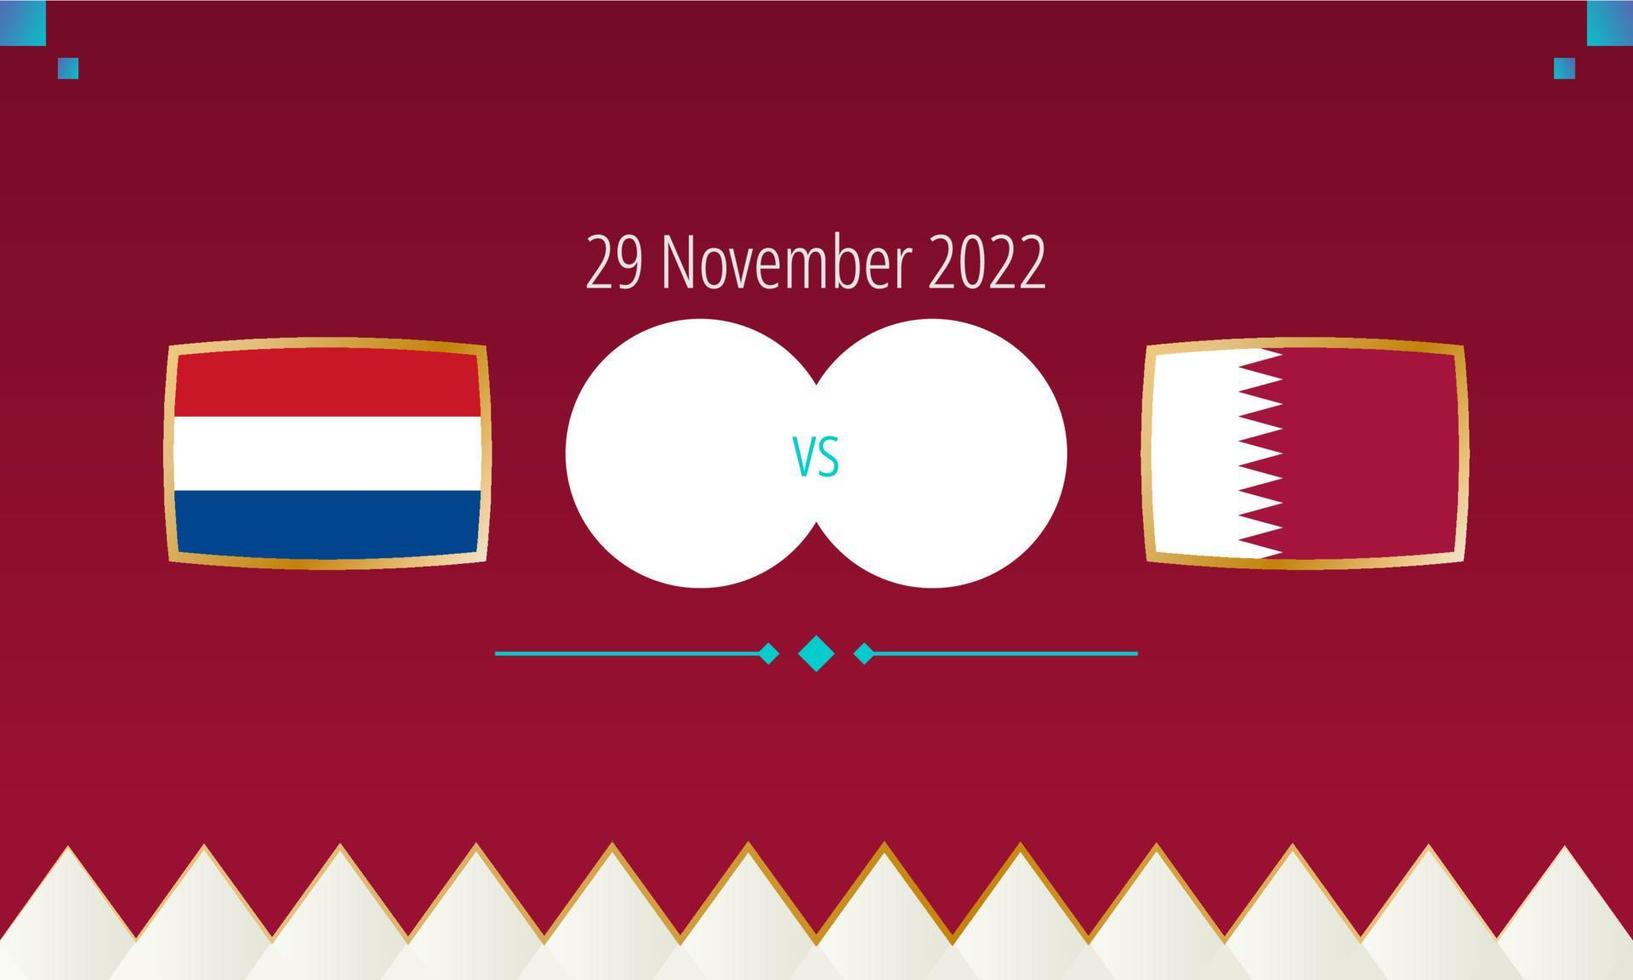 match de football pays-bas contre qatar, compétition internationale de football 2022. vecteur